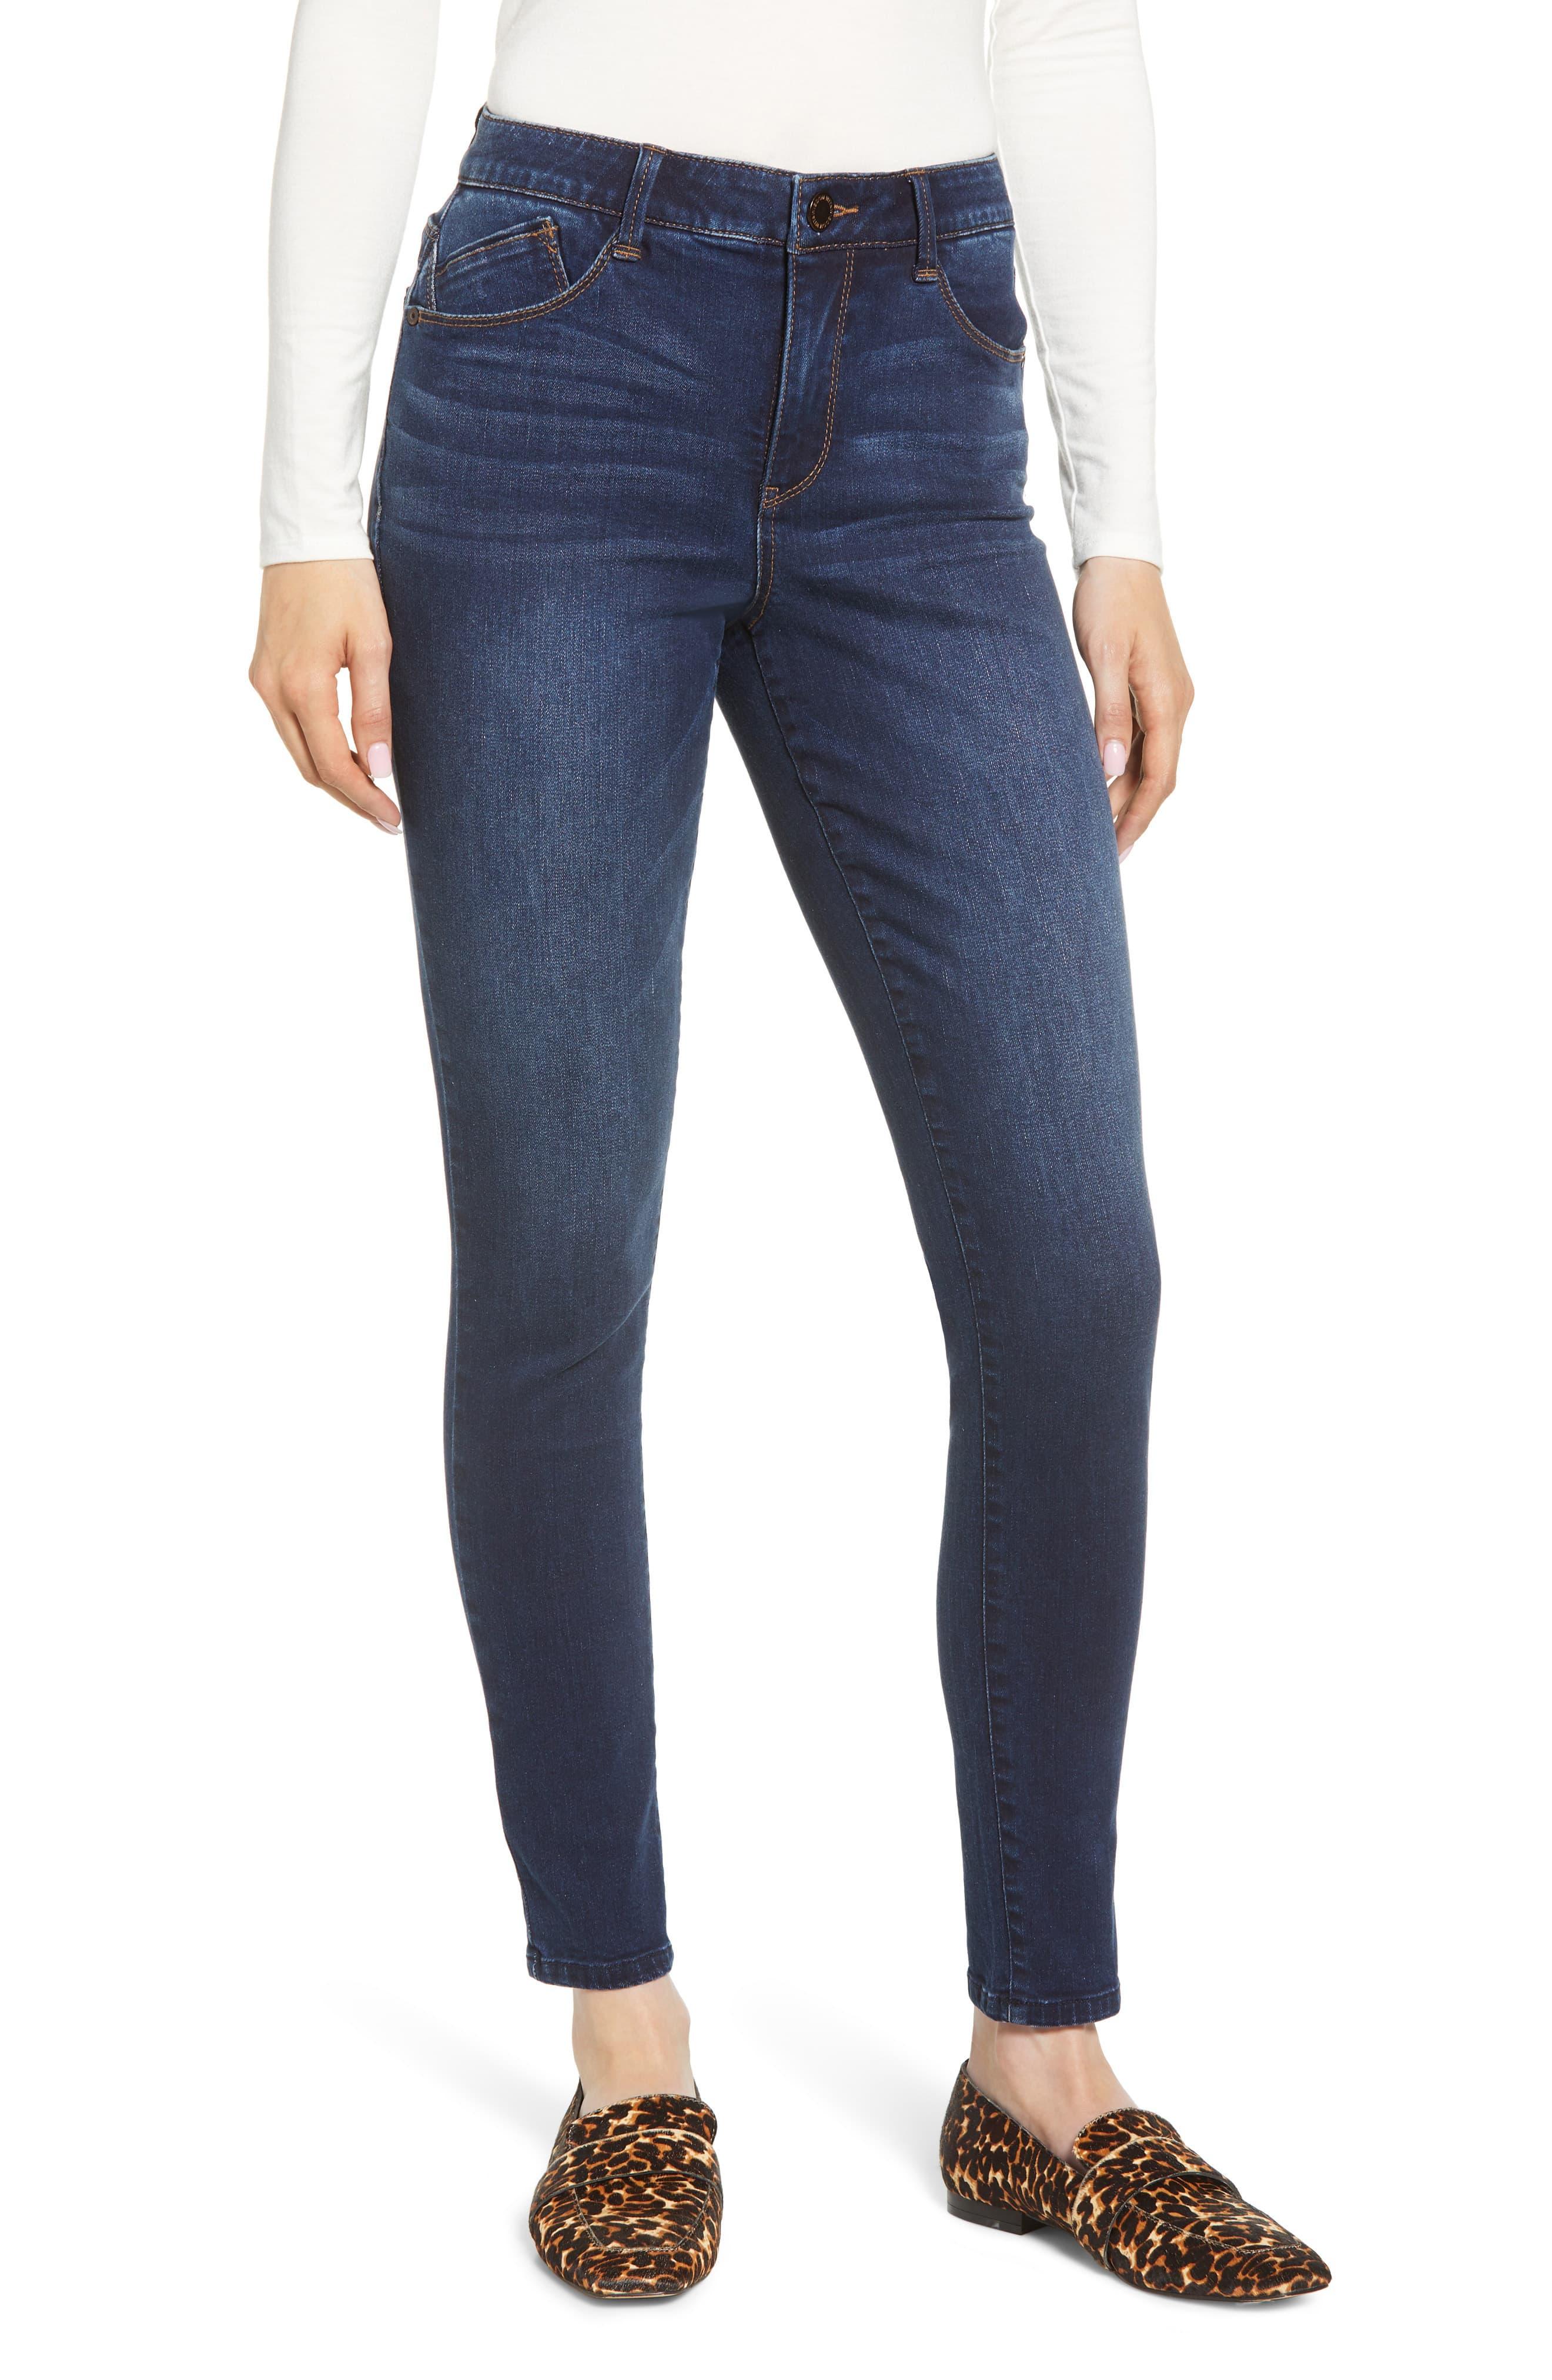 Wit & Wisdom Denim Ab-solution High Waist Skinny Jeans in in- Indigo ...